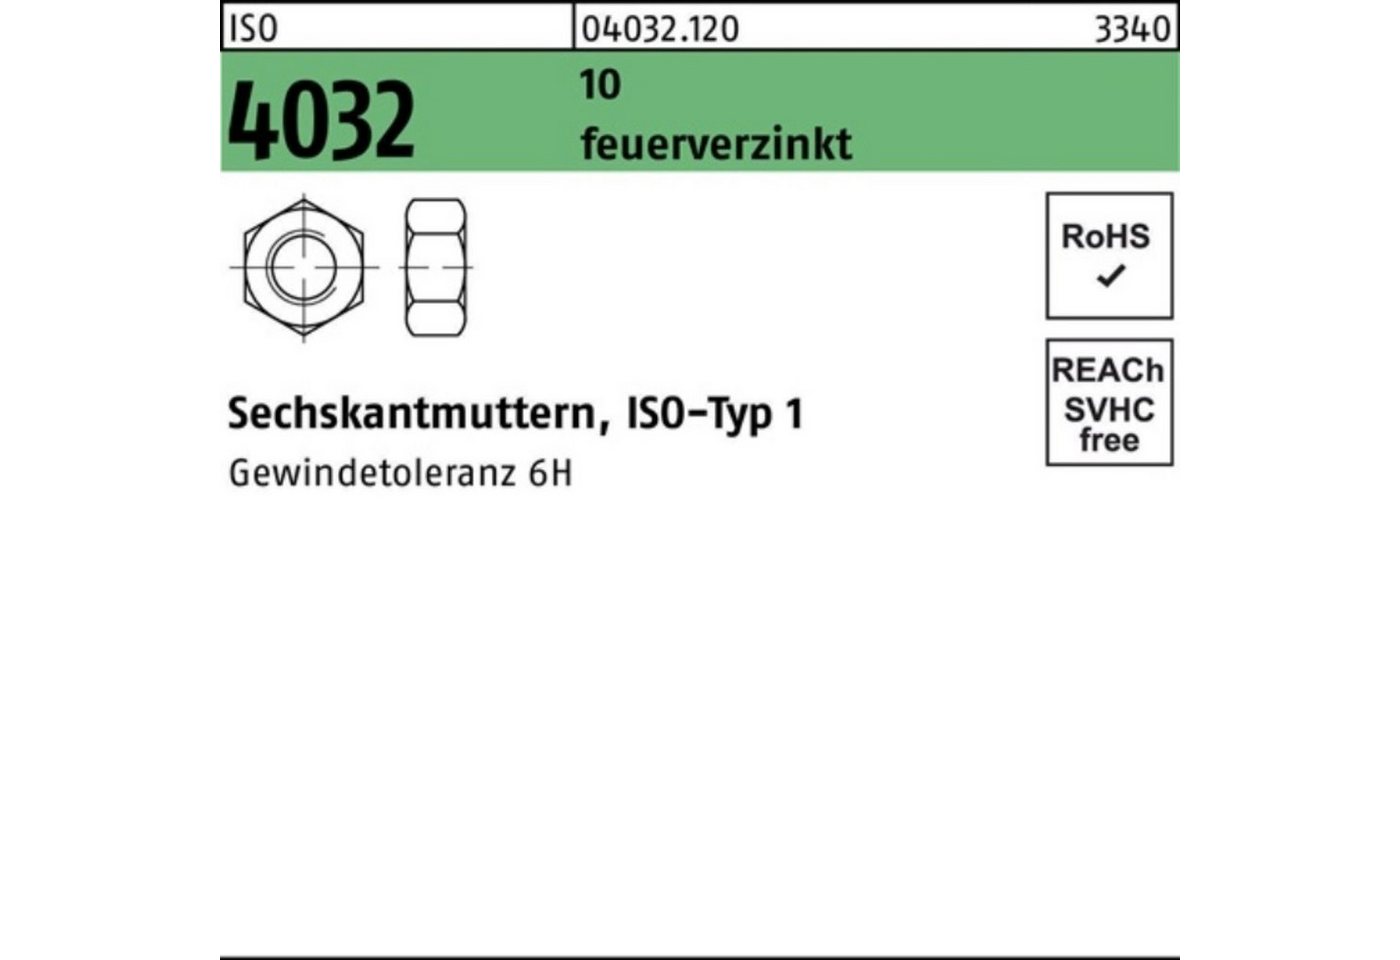 Bufab Muttern 100er Pack Sechskantmutter ISO 4032 M48 10 feuerverz. 1 Stück ISO 403 von Bufab